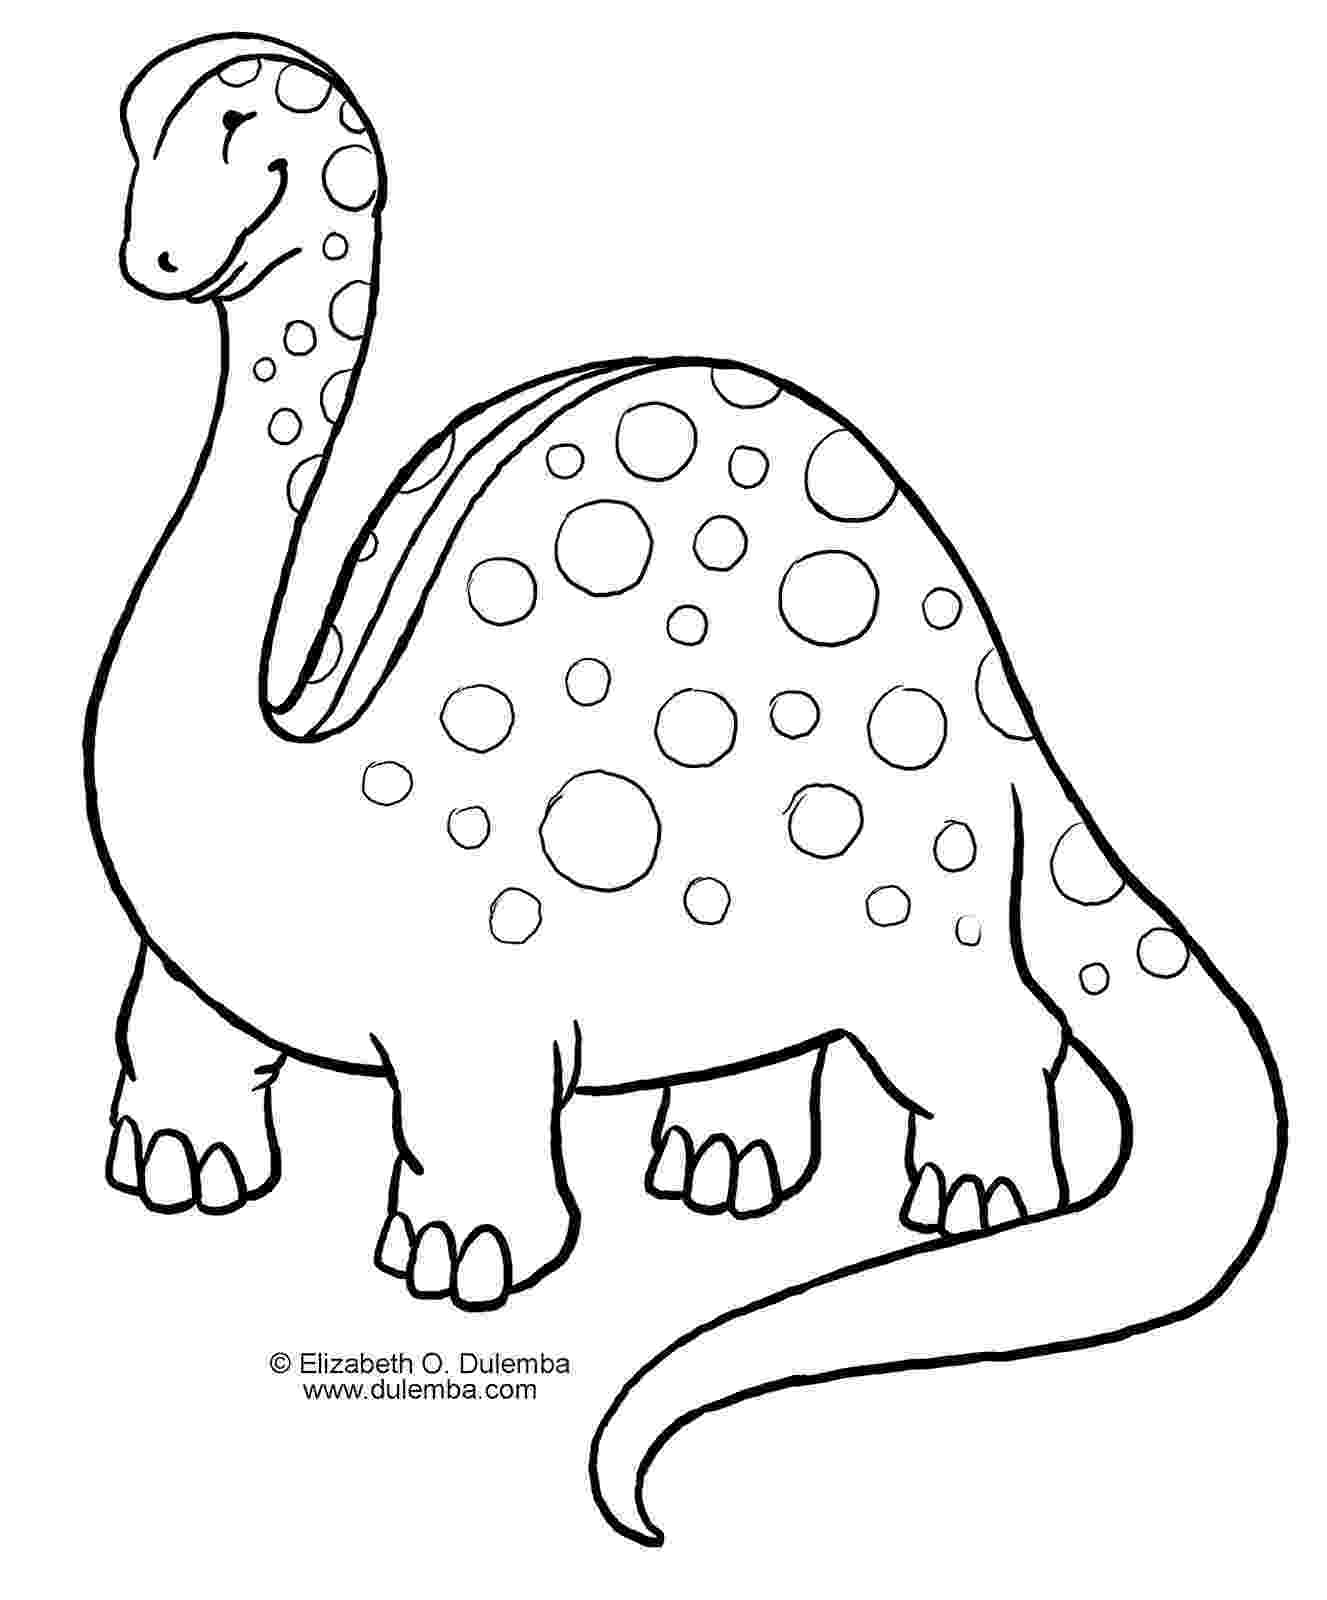 dinosaur colouring page dinosaur coloring pages what to expect dinosaur colouring page 